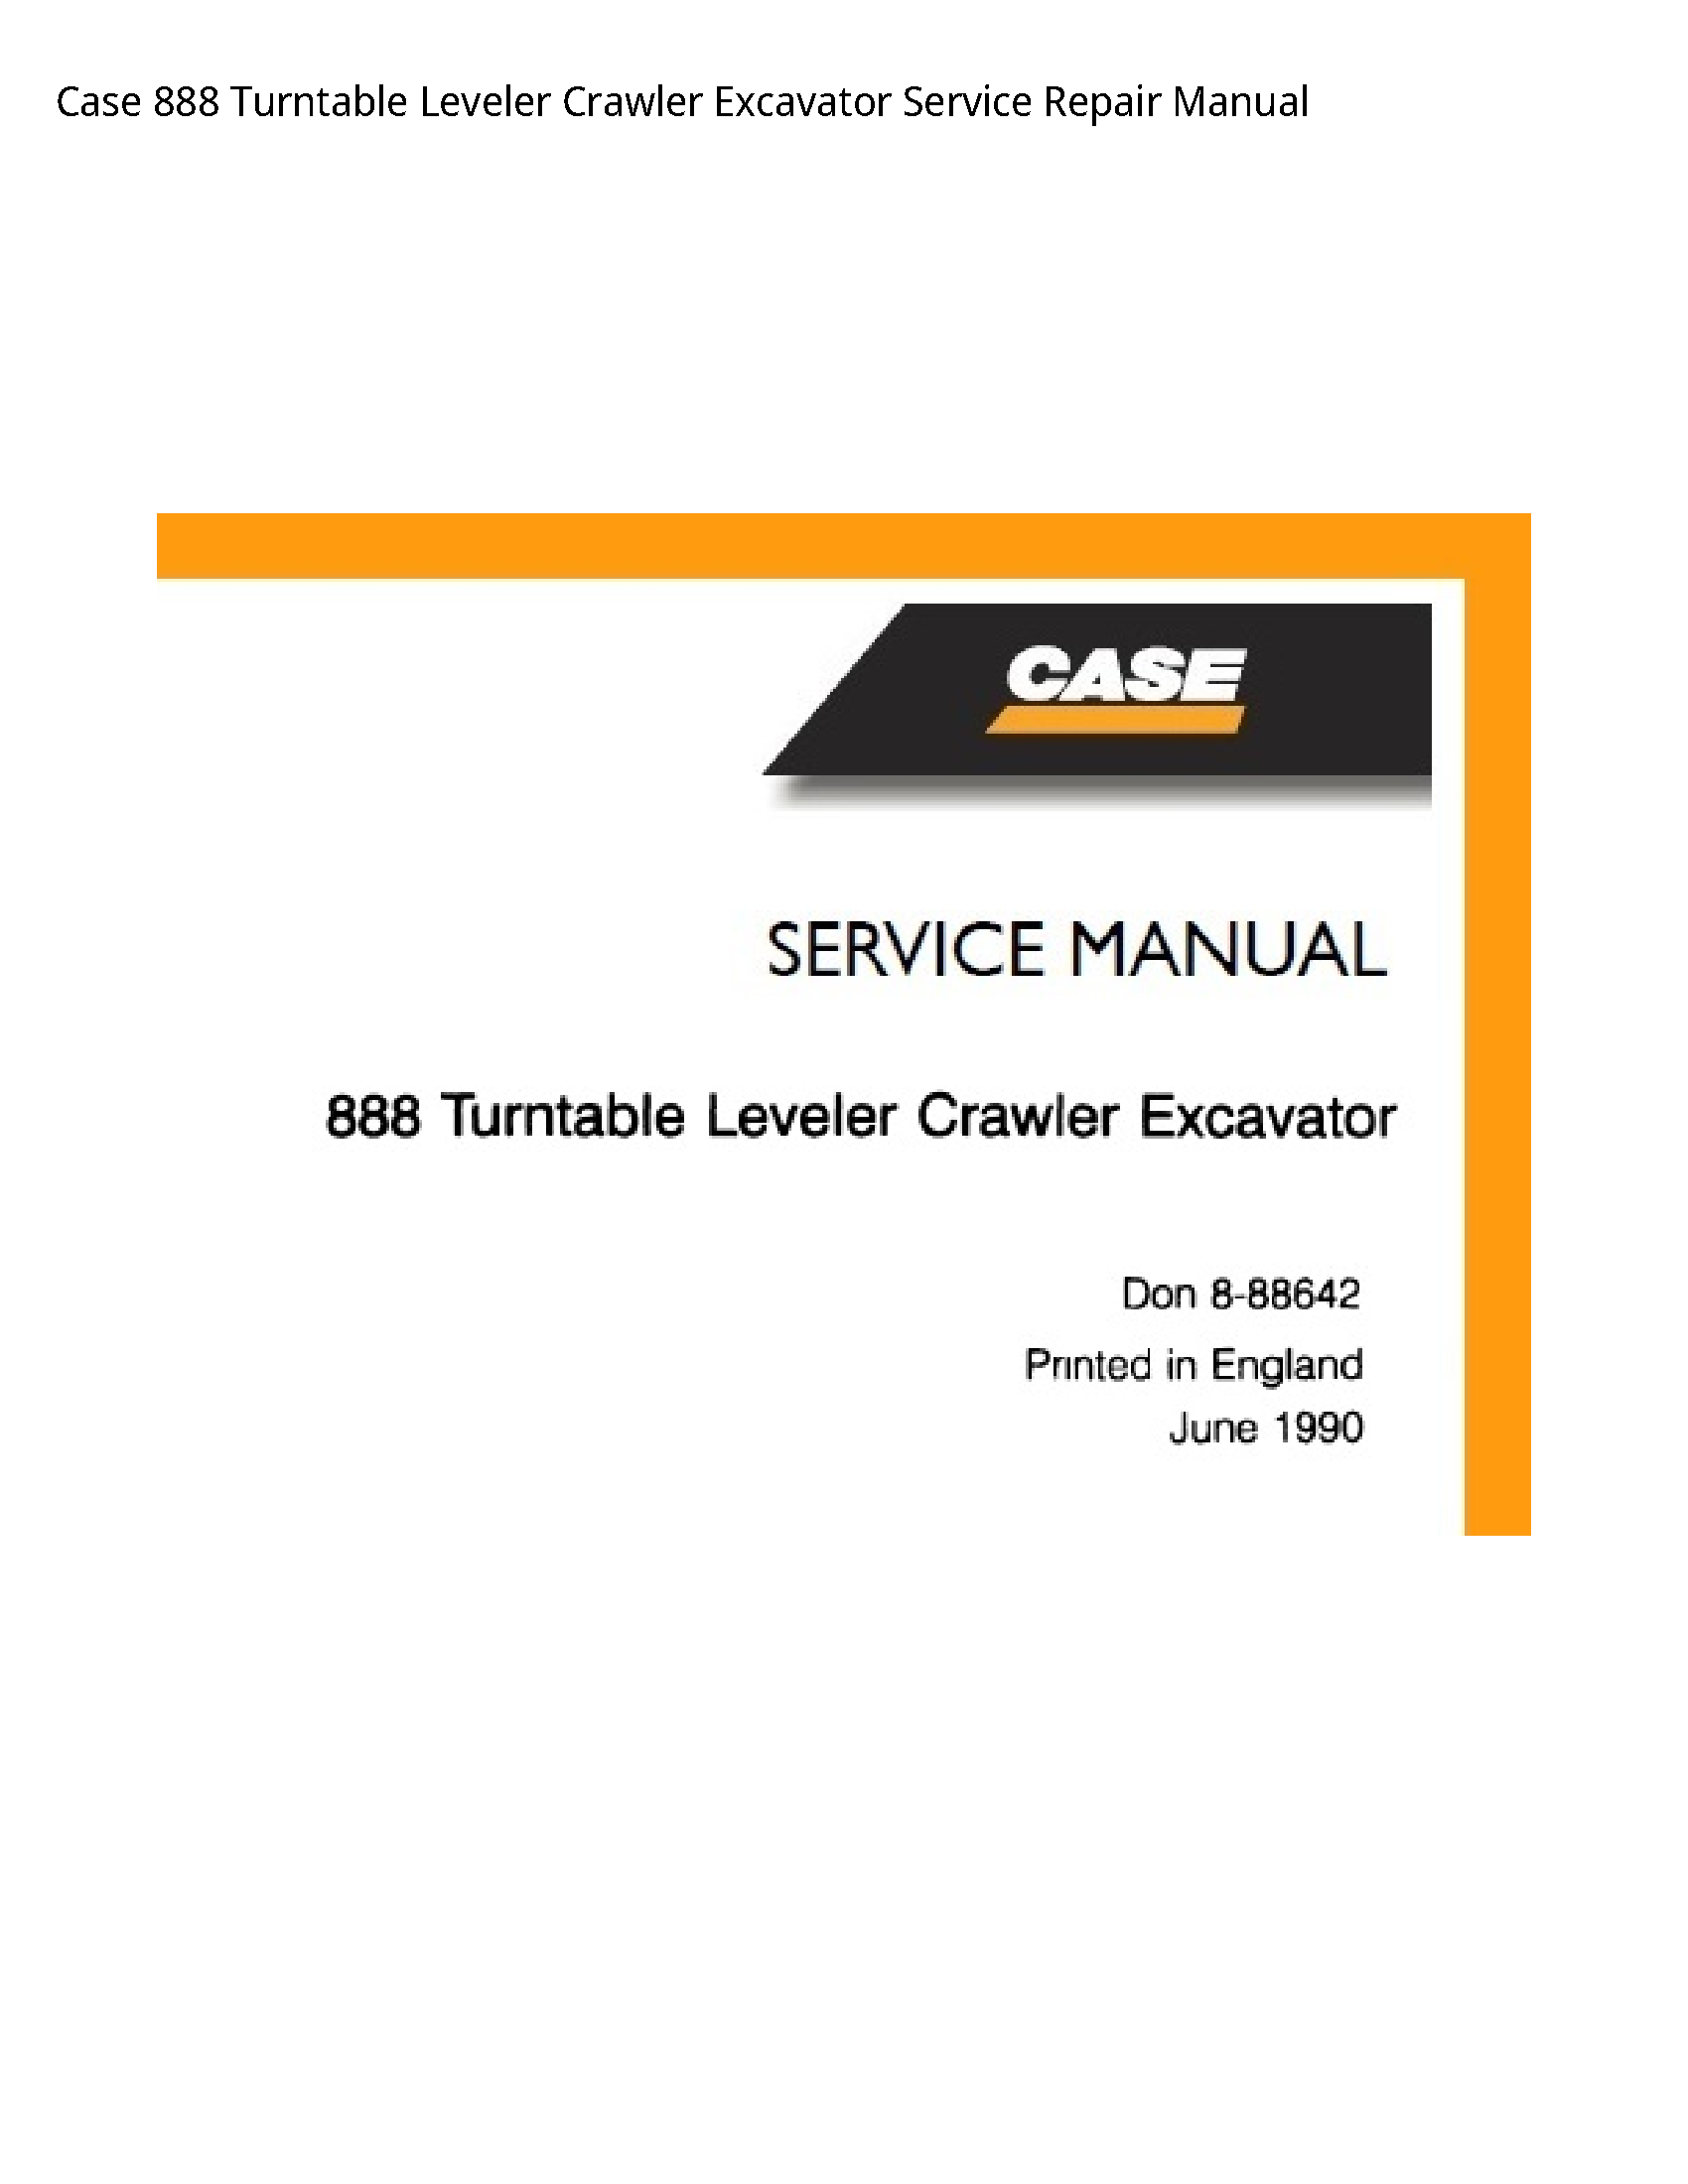 Case/Case IH 888 Turntable Leveler Crawler Excavator manual